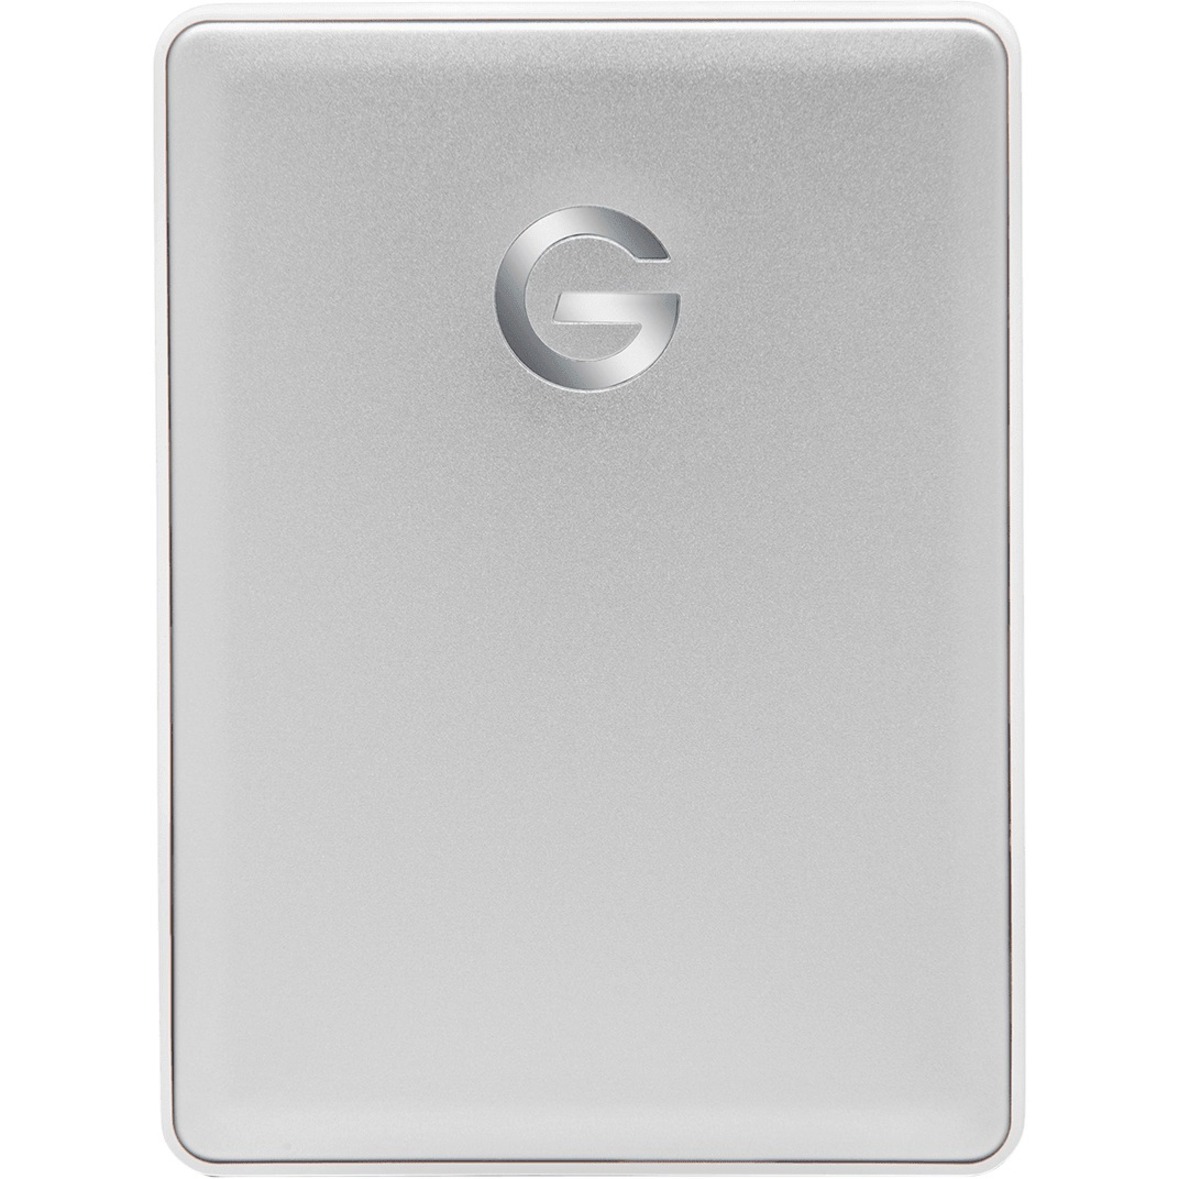 G-Technology G-DRIVE mobile USB-C 0G10339-1 2 TB Portable Hard Drive, 2.5" External, Silver - image 3 of 9